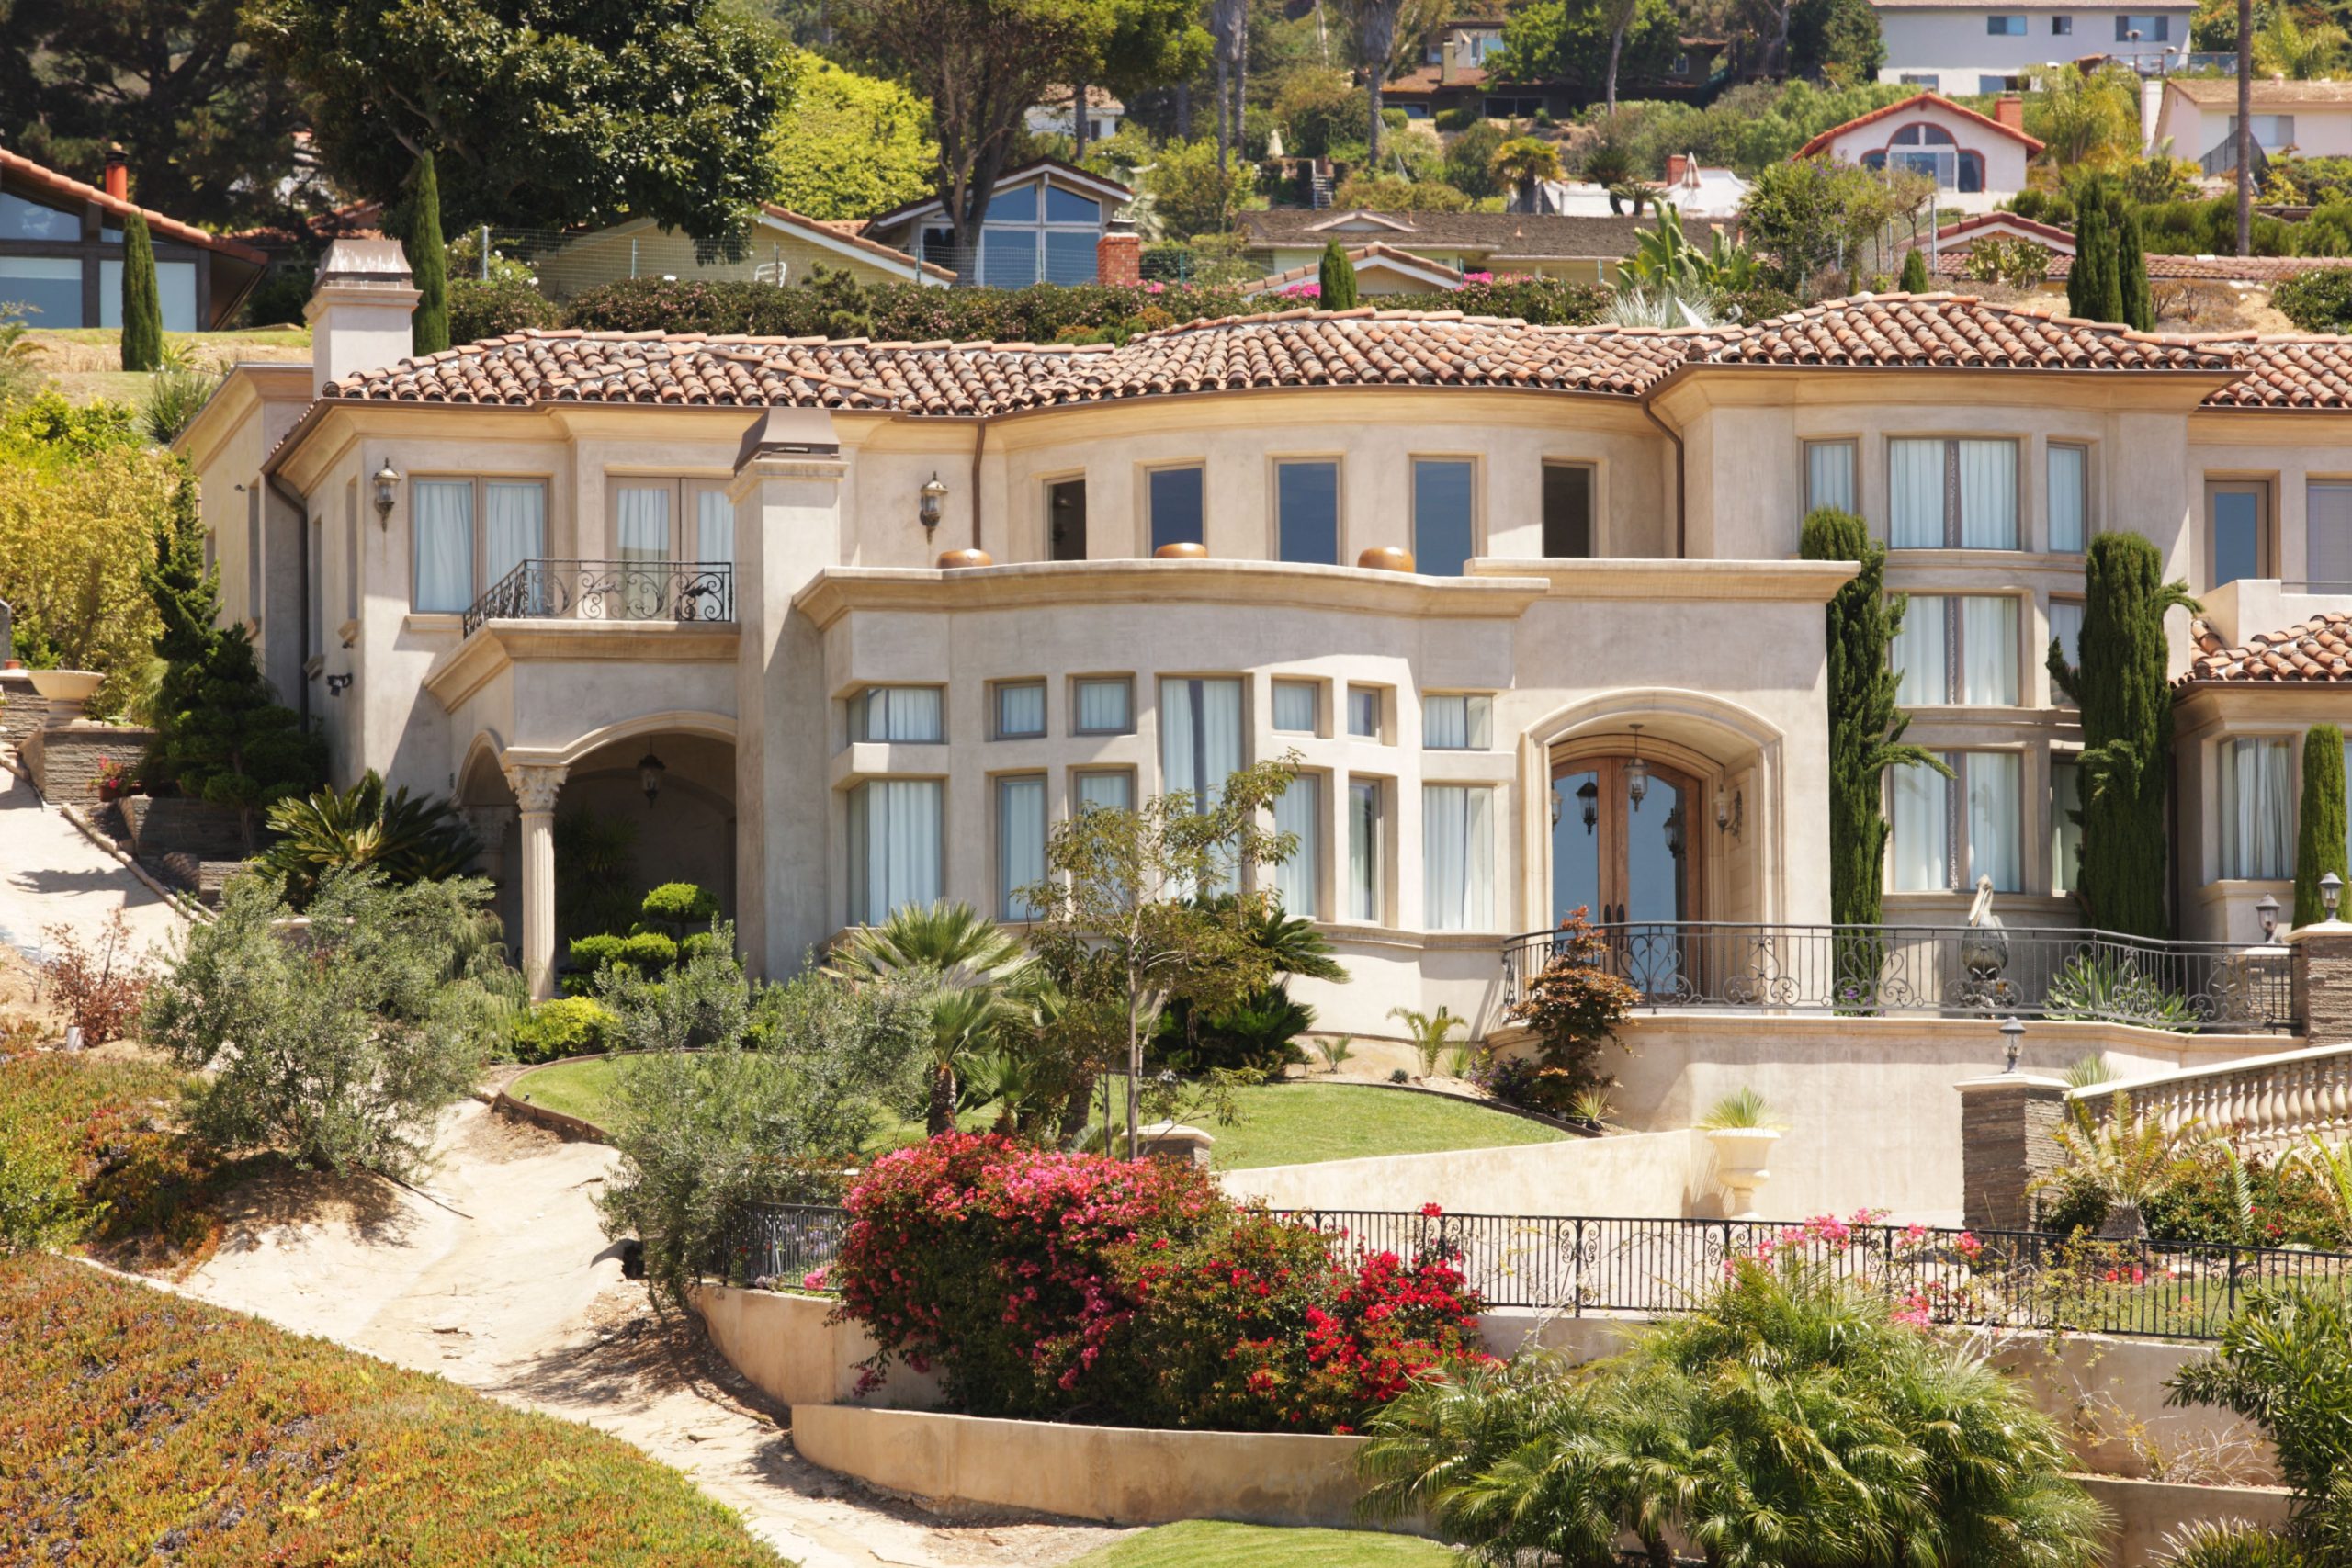 Mediterranean villa design